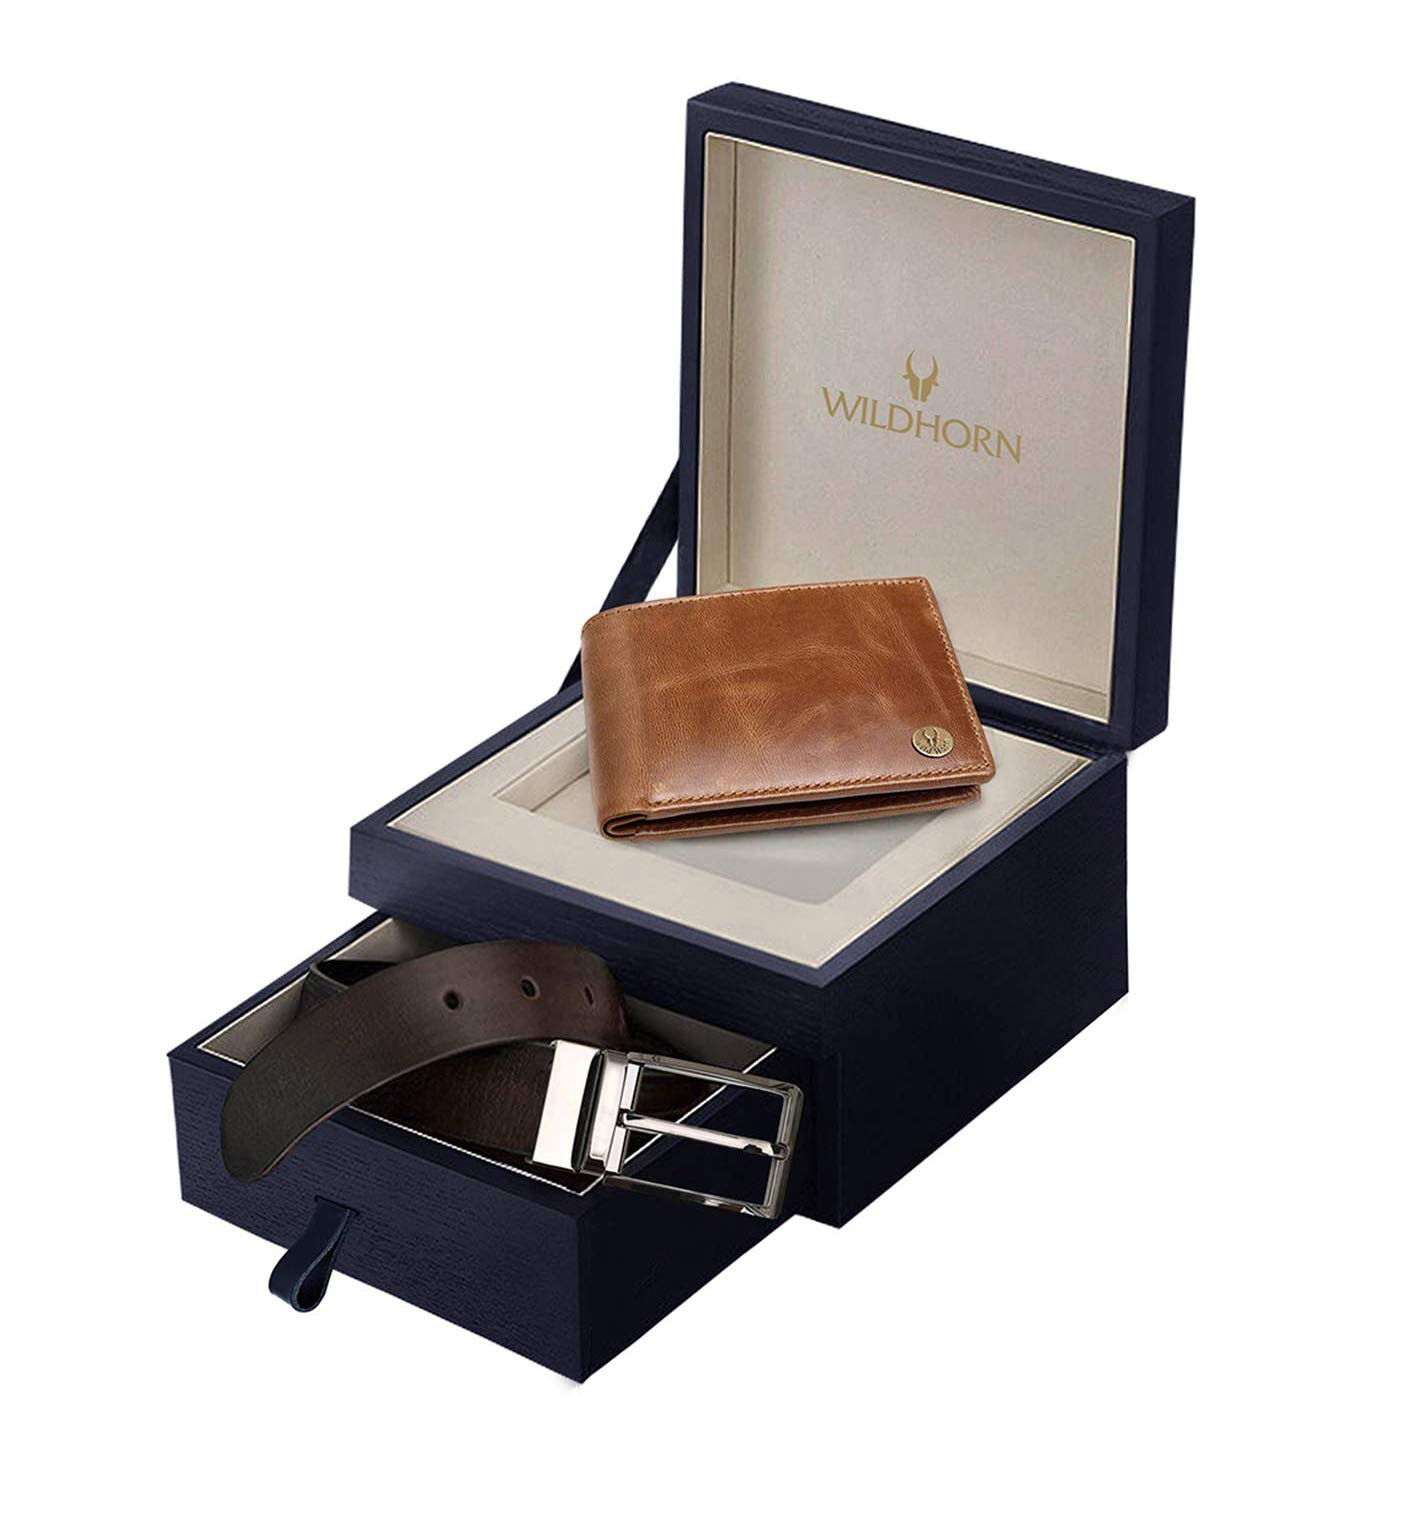 WildHorn Gift Hamper for Men I Leather Wallet & Belt Combo Gift Set I Gift for Friend, Boyfriend,Husband,Father, Son etc (Tan ch)